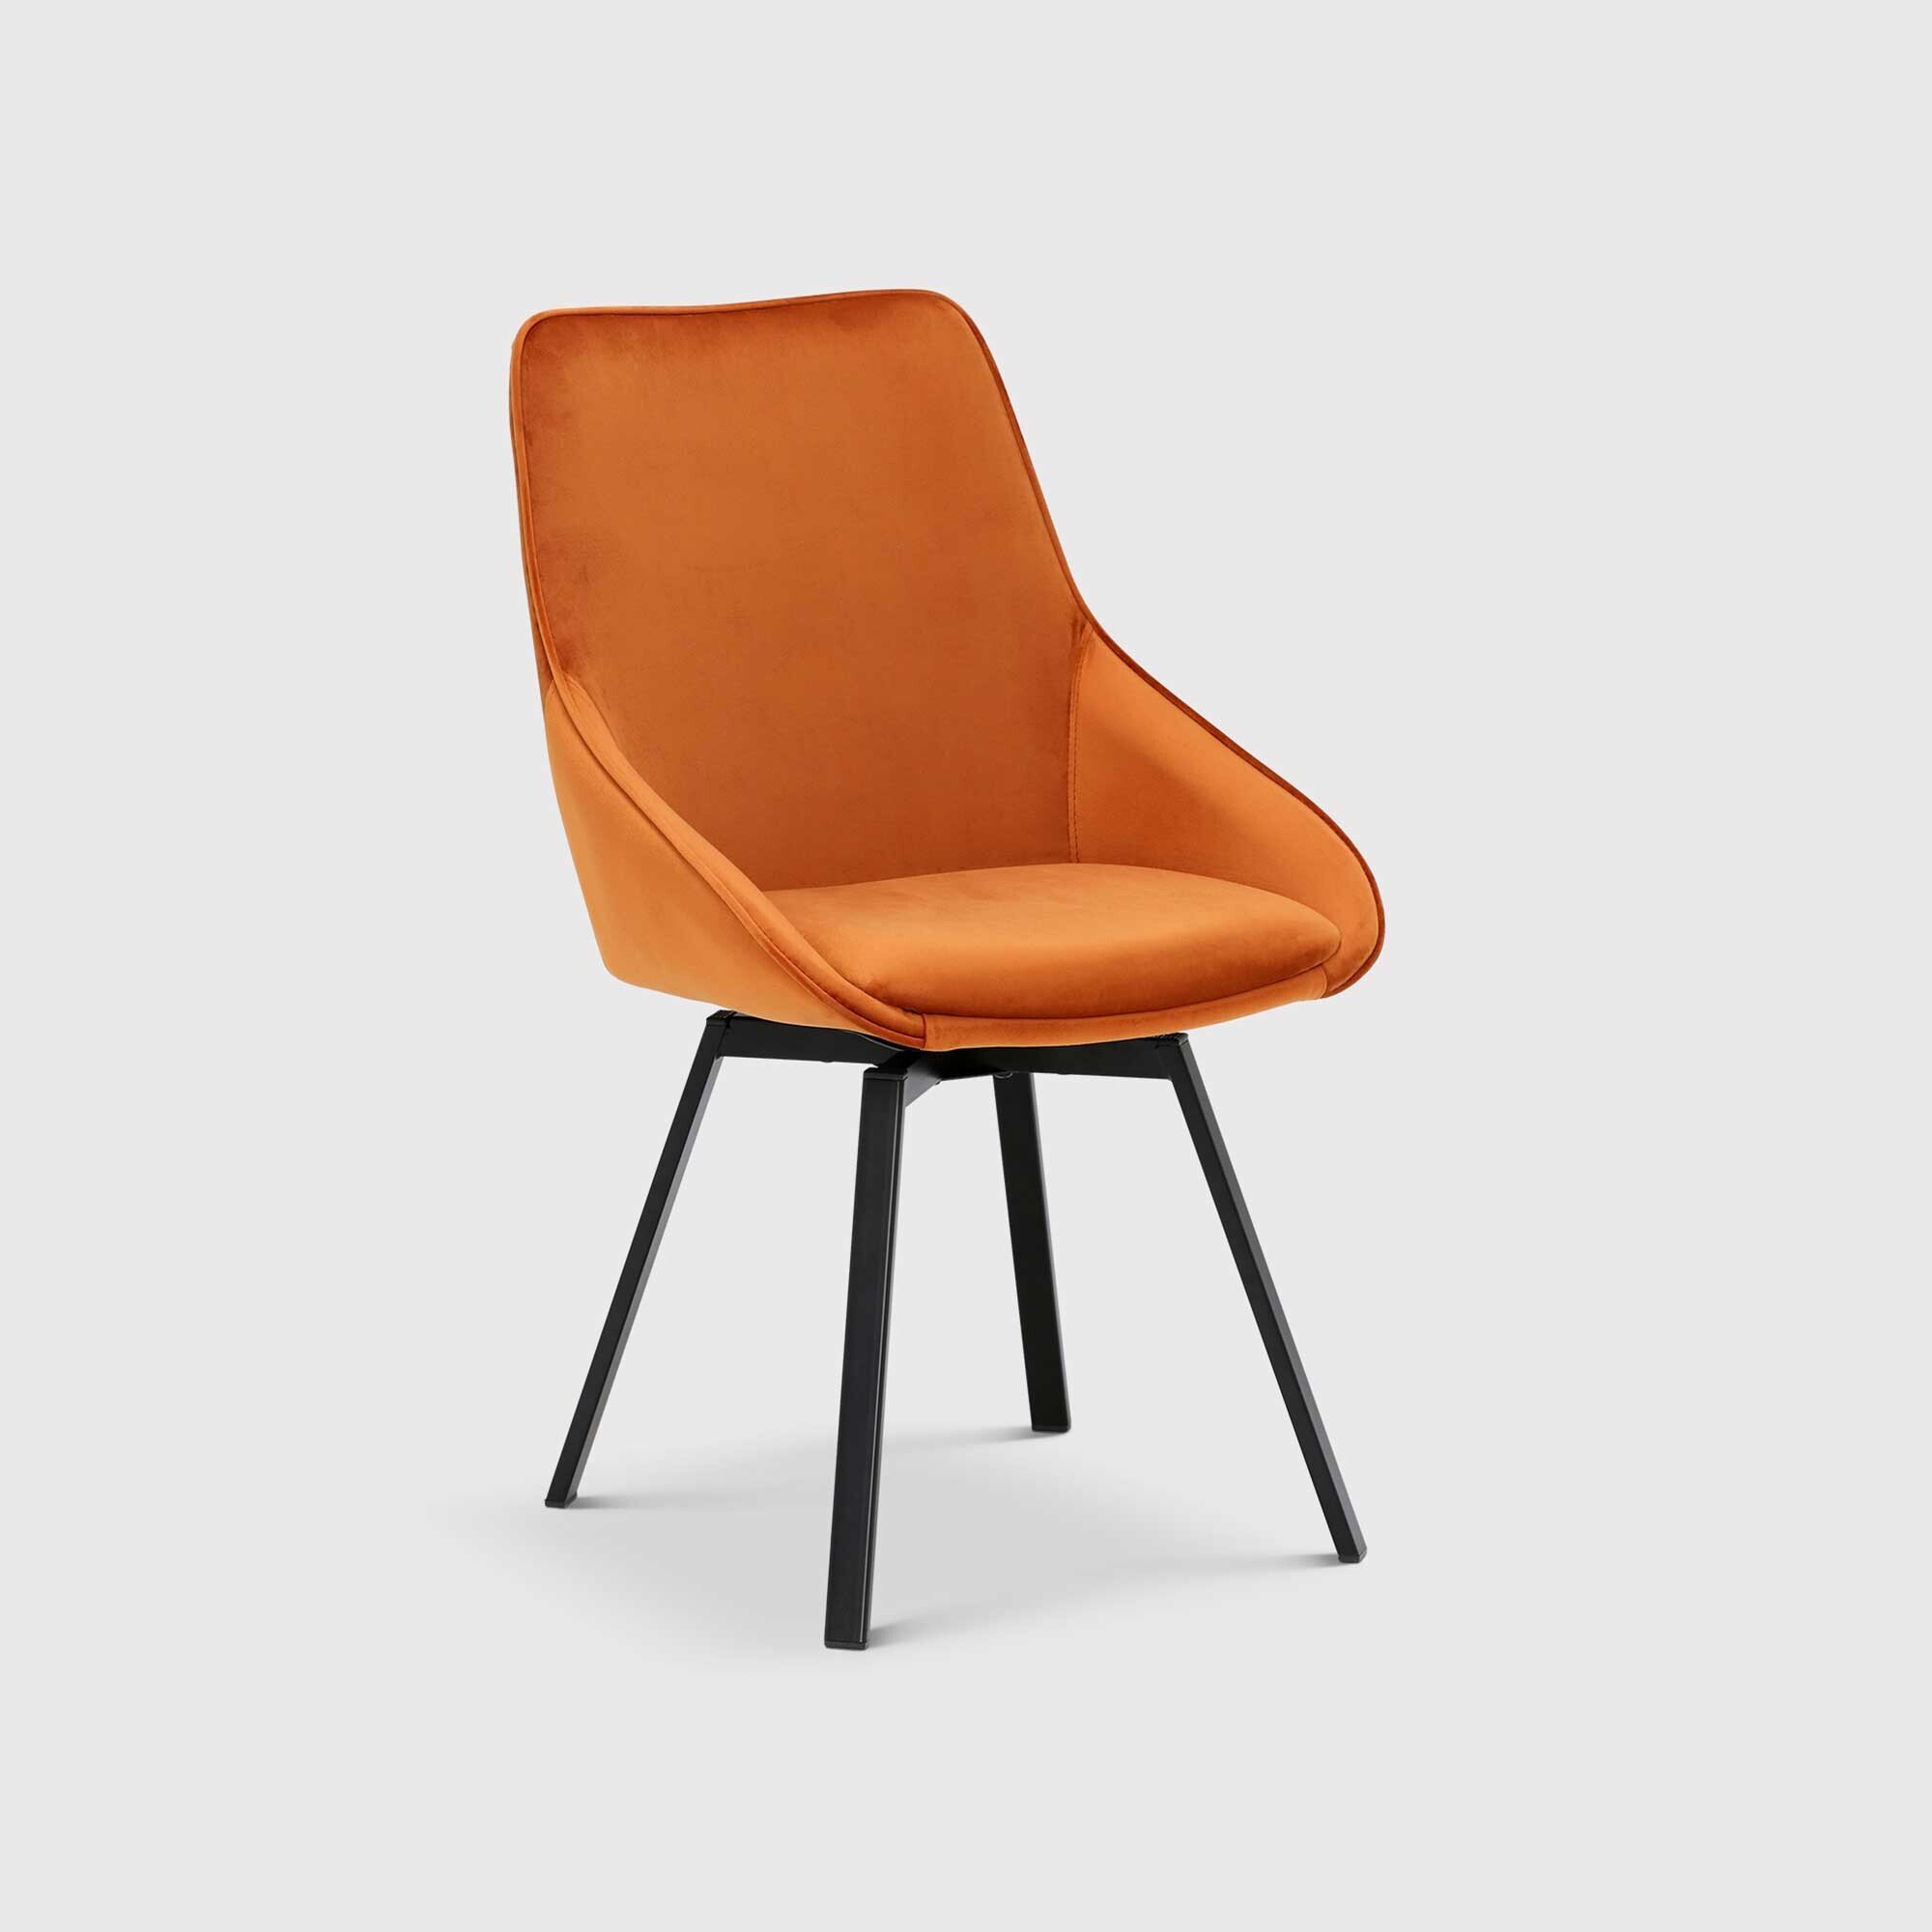 Beckton Leisure Swivel Dining Chair, Orange | Barker & Stonehouse